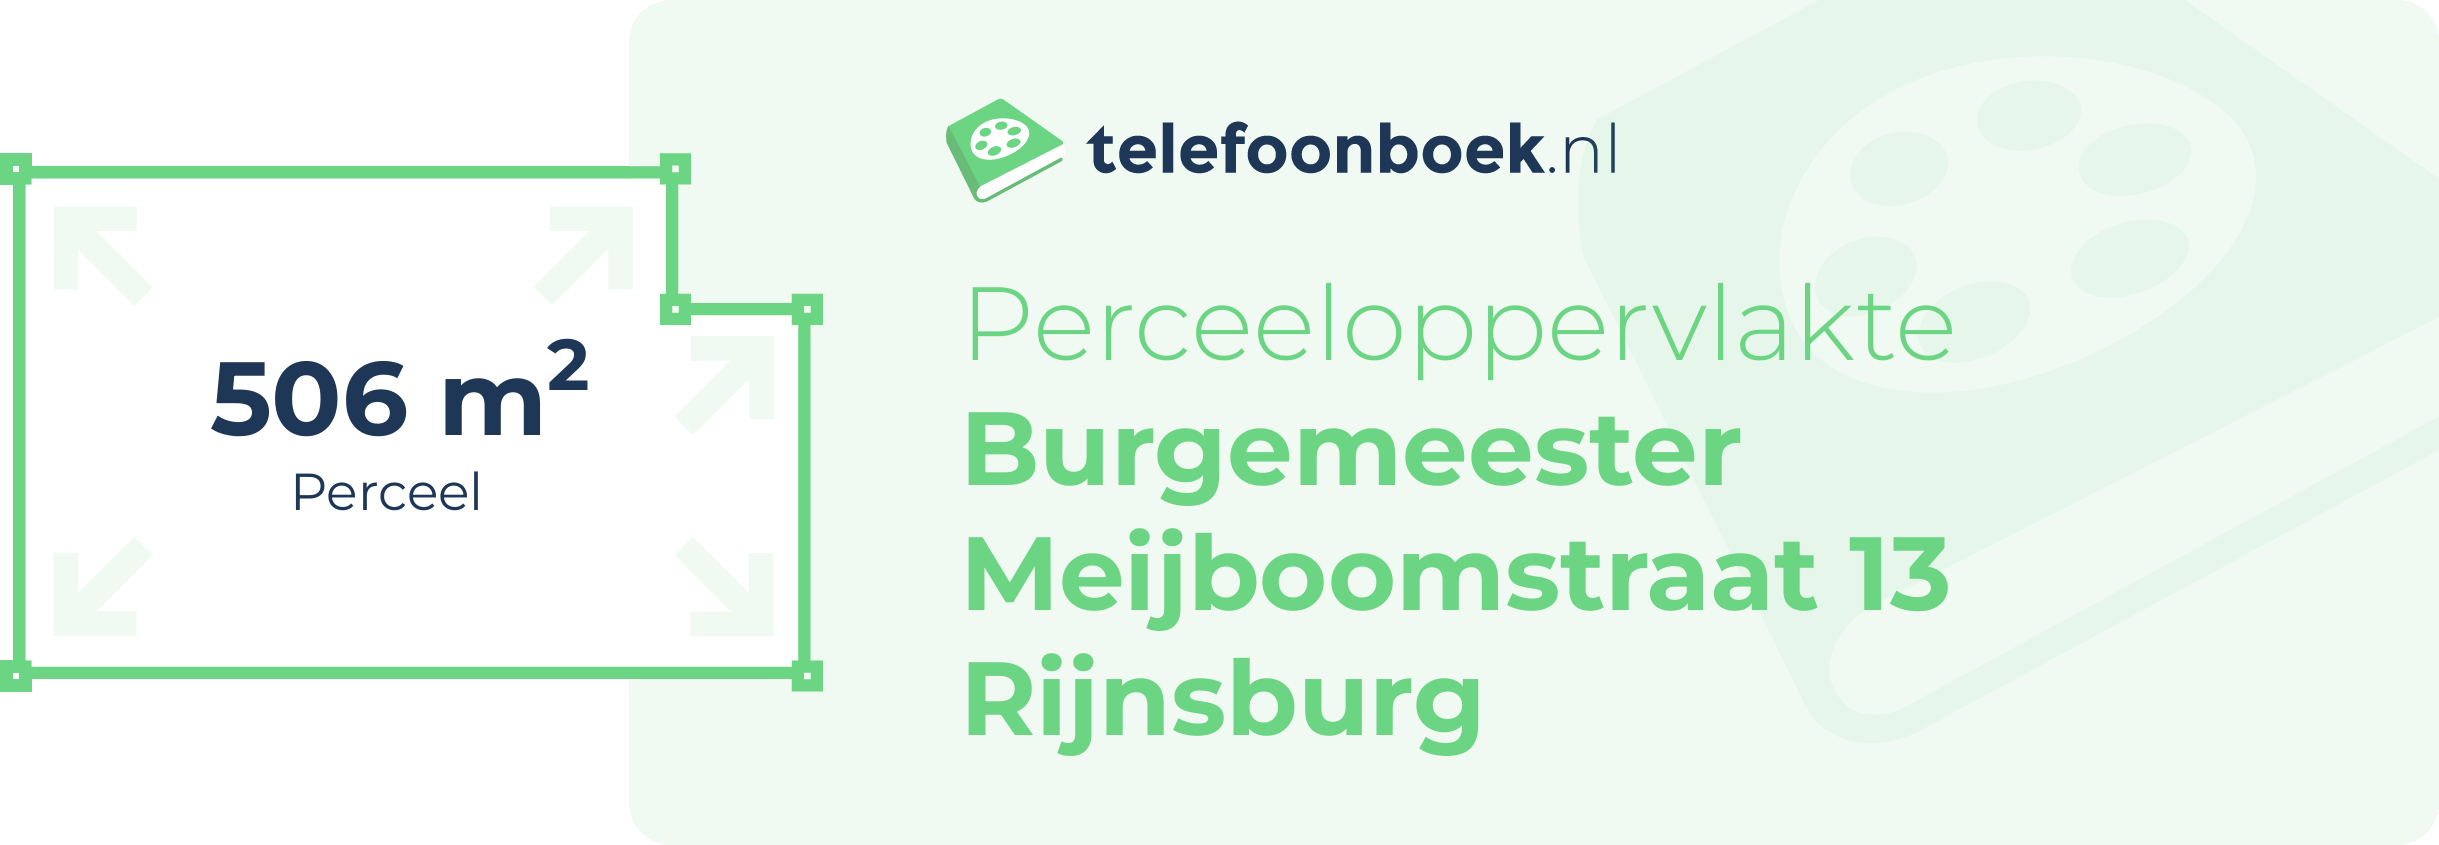 Perceeloppervlakte Burgemeester Meijboomstraat 13 Rijnsburg